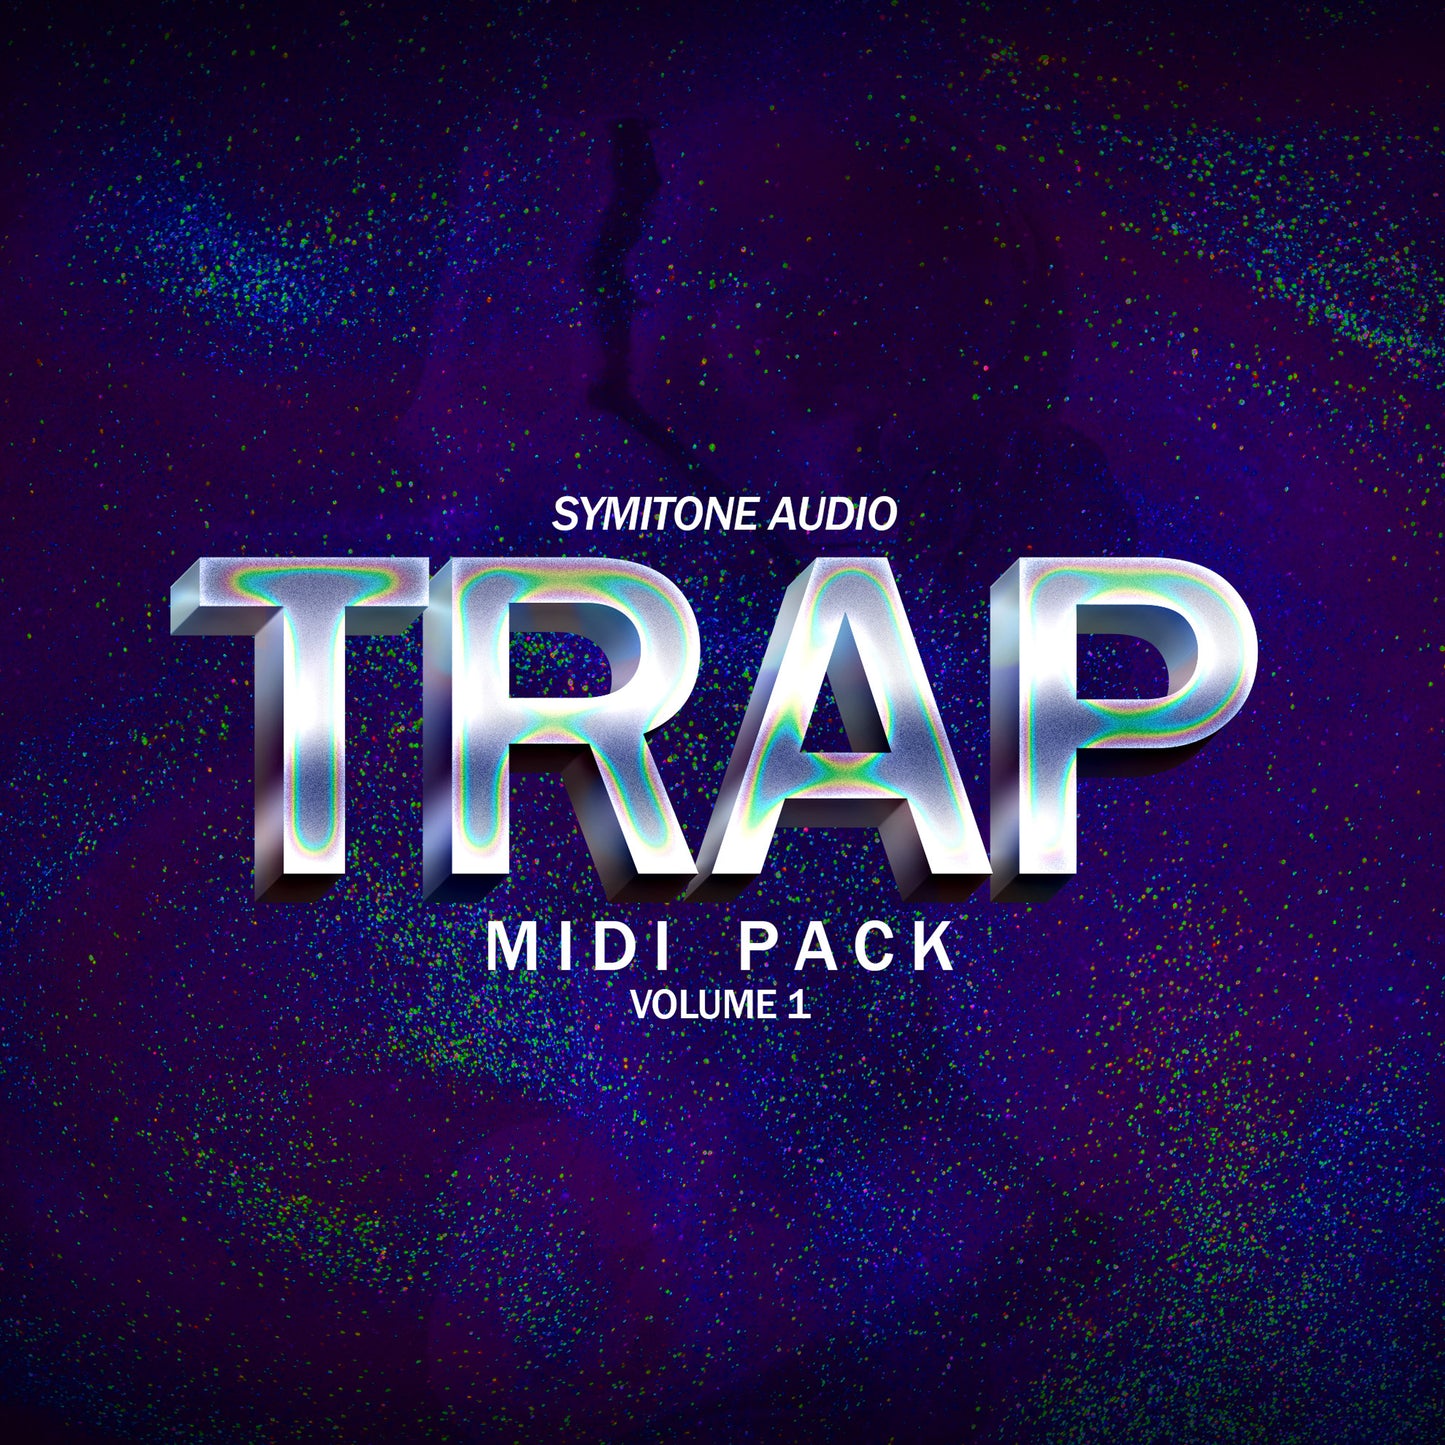 Trap MIDI Pack Vol.1